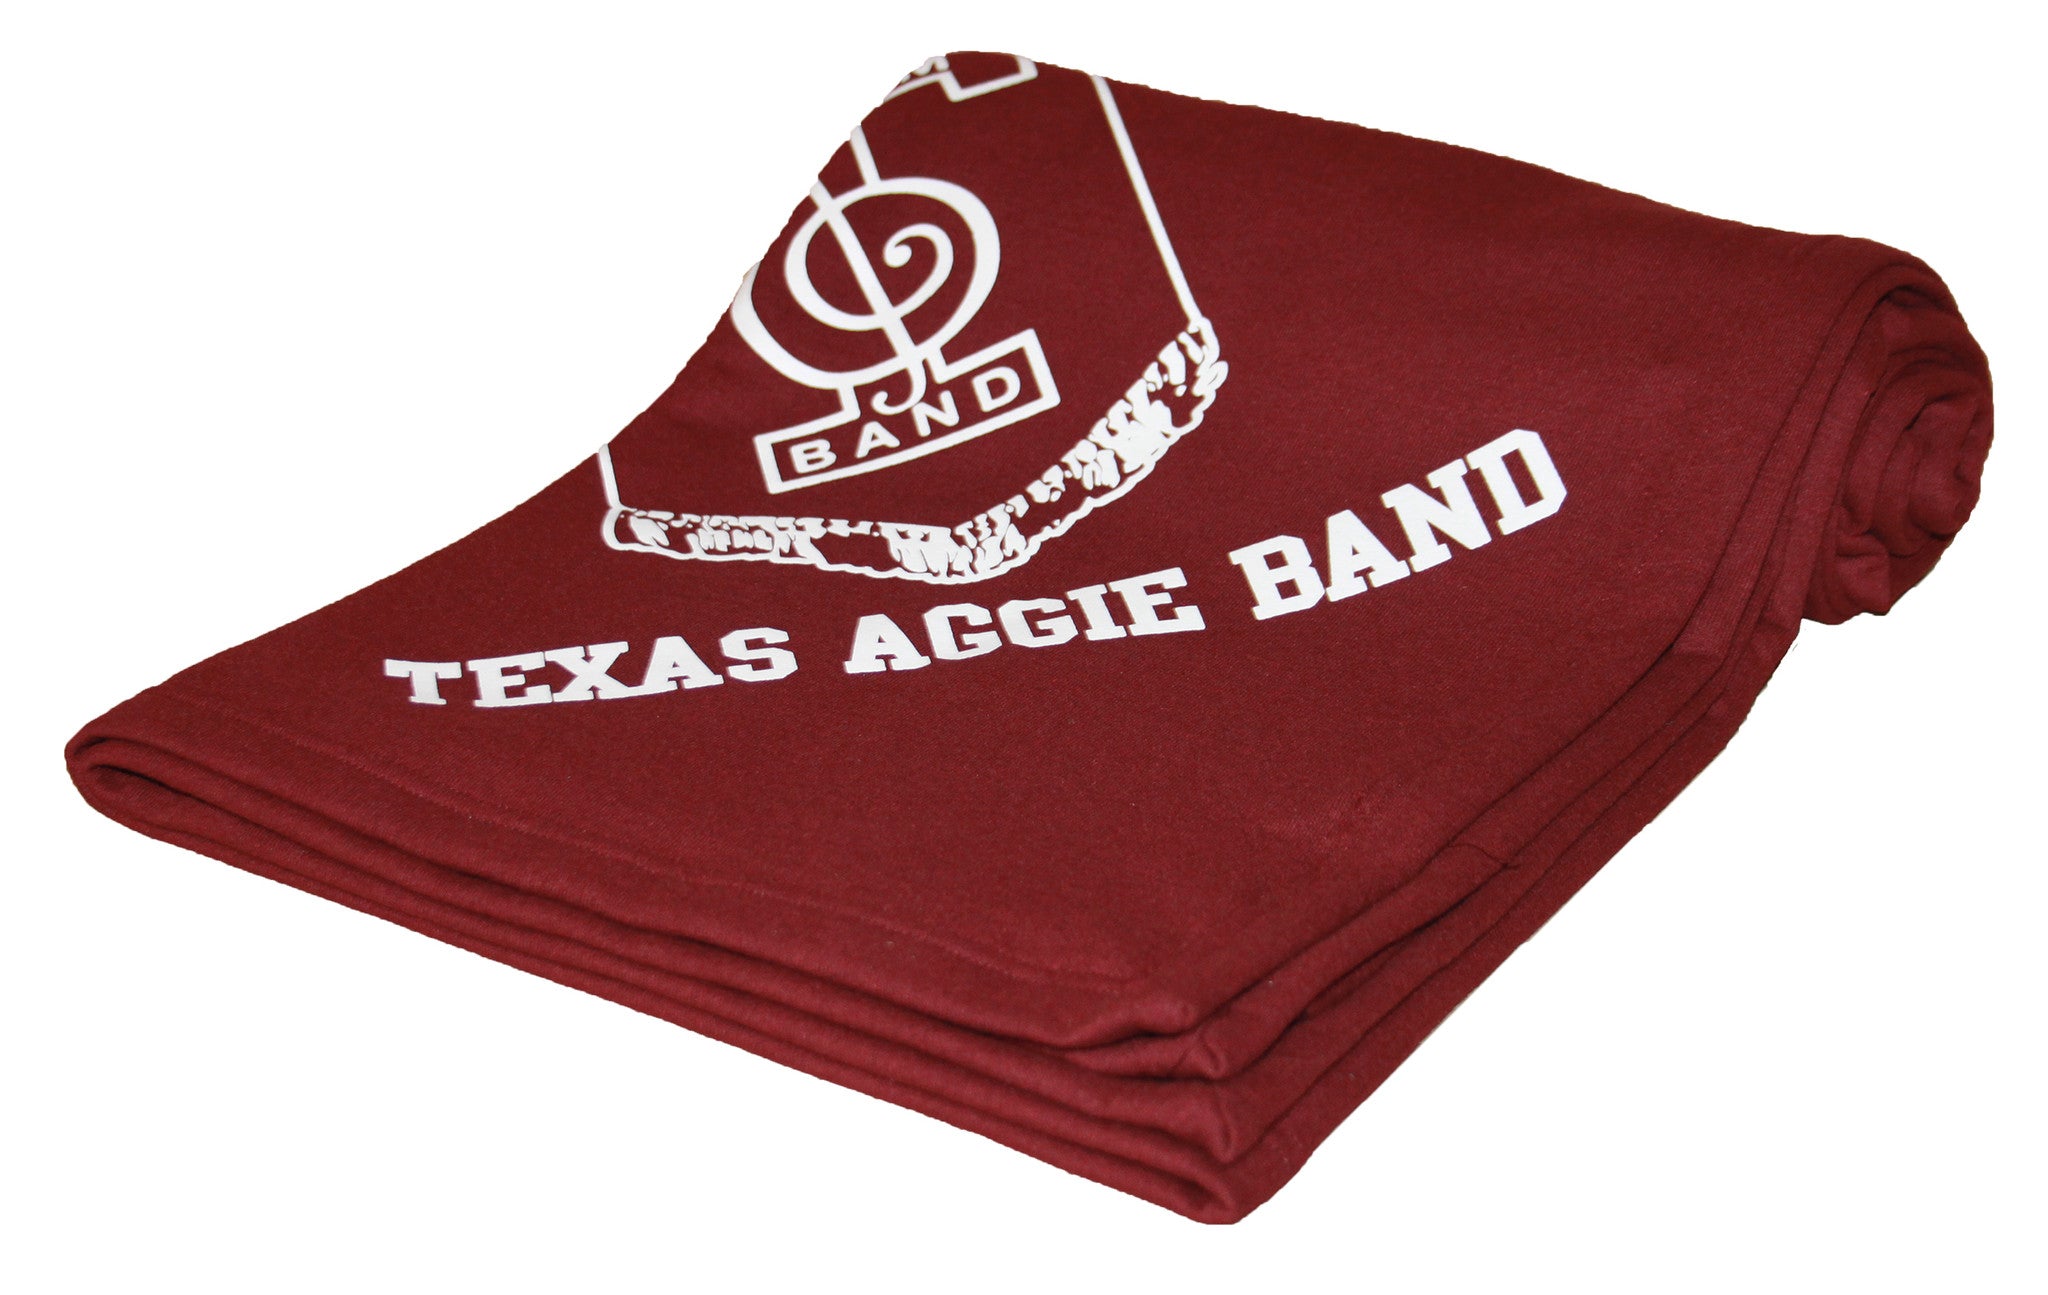 Aggie Band Banner Sweatshirt Blanket